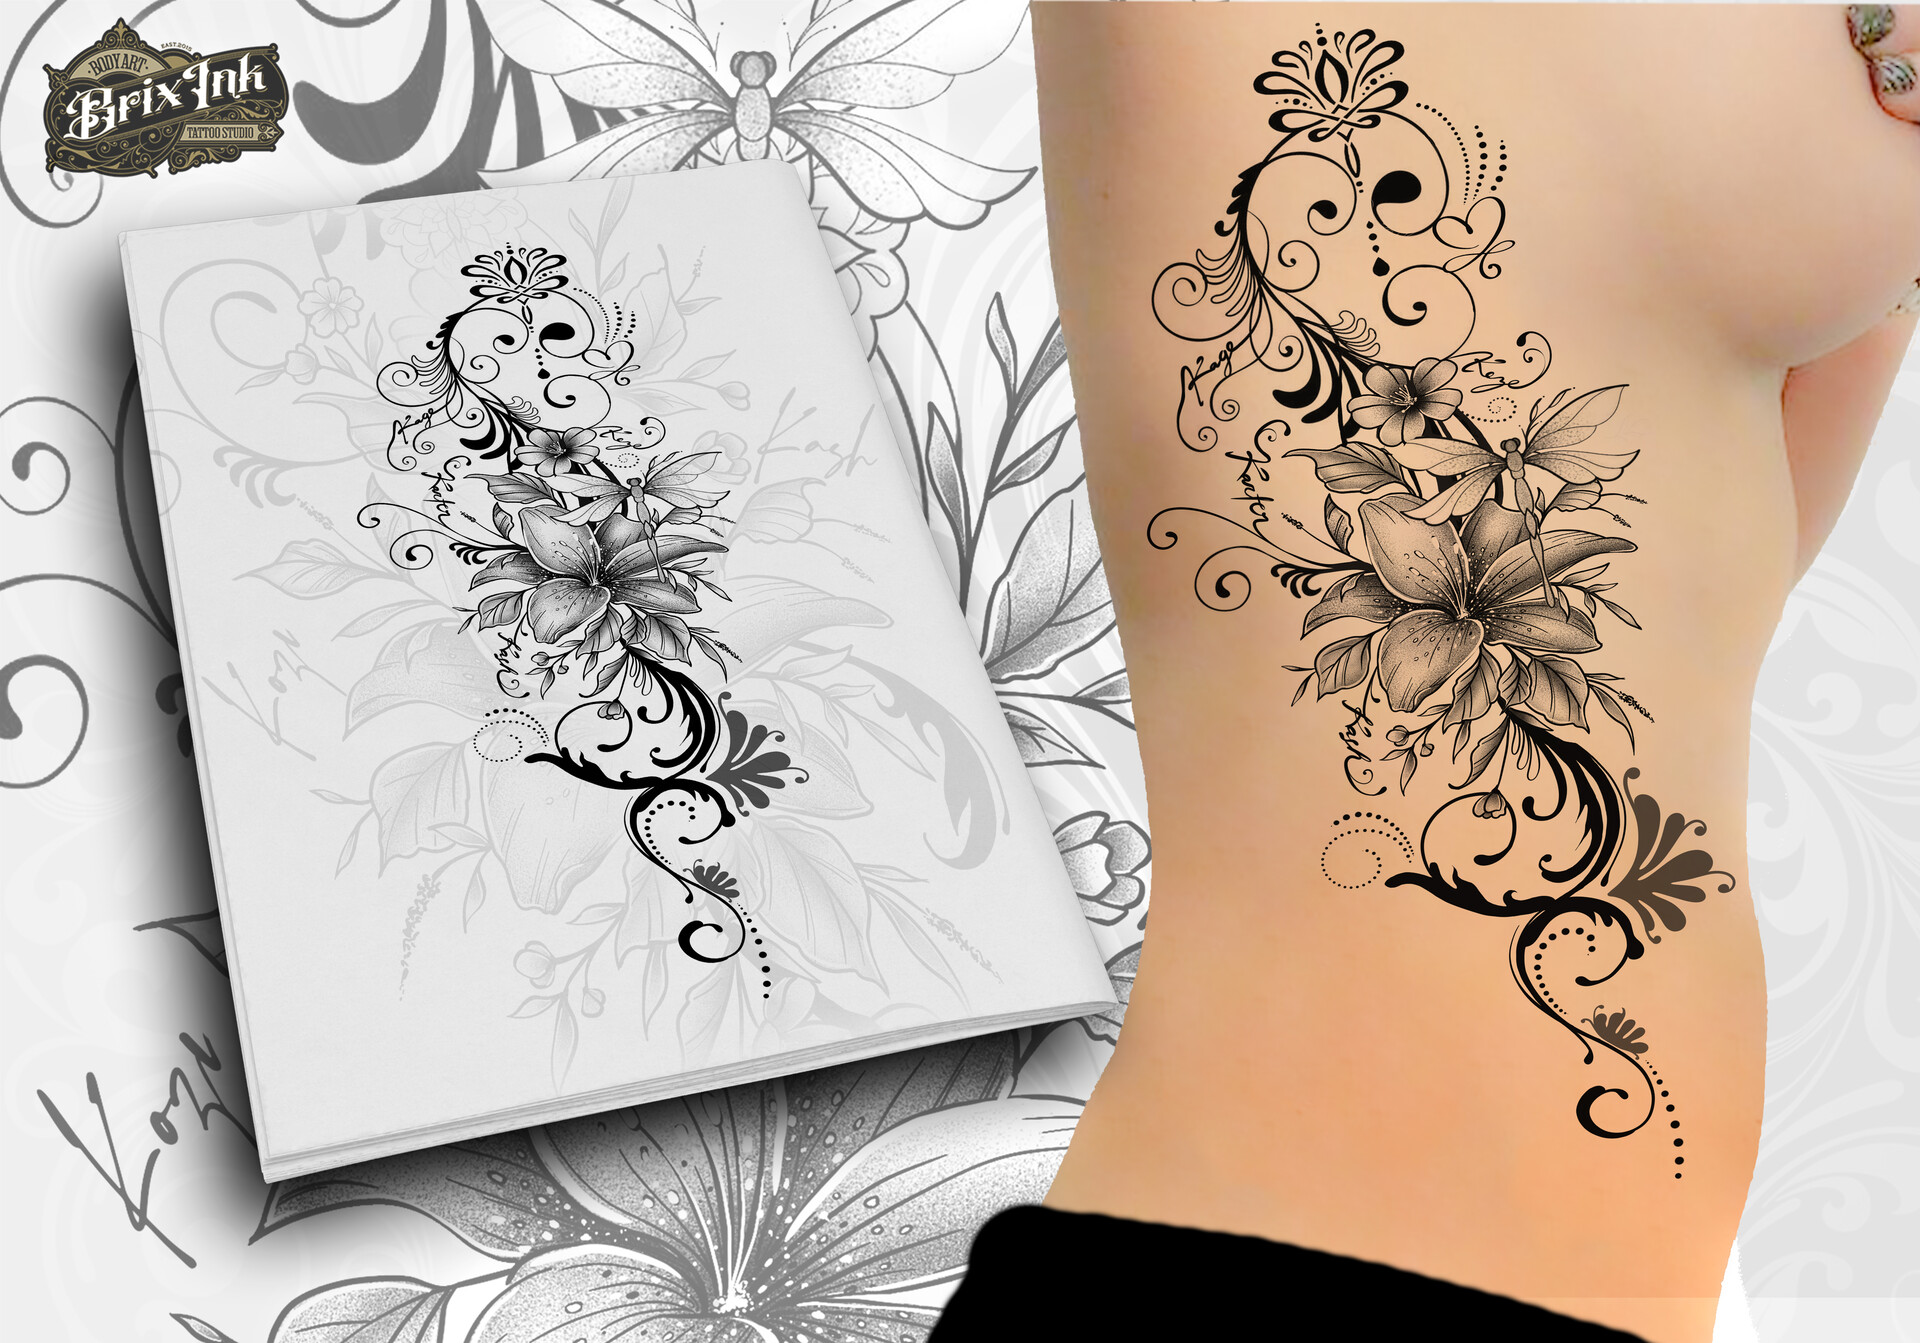 New Ink. Andrew Black (artist). Ace Custom Tattoos-Charlotte, NC : r/tattoos